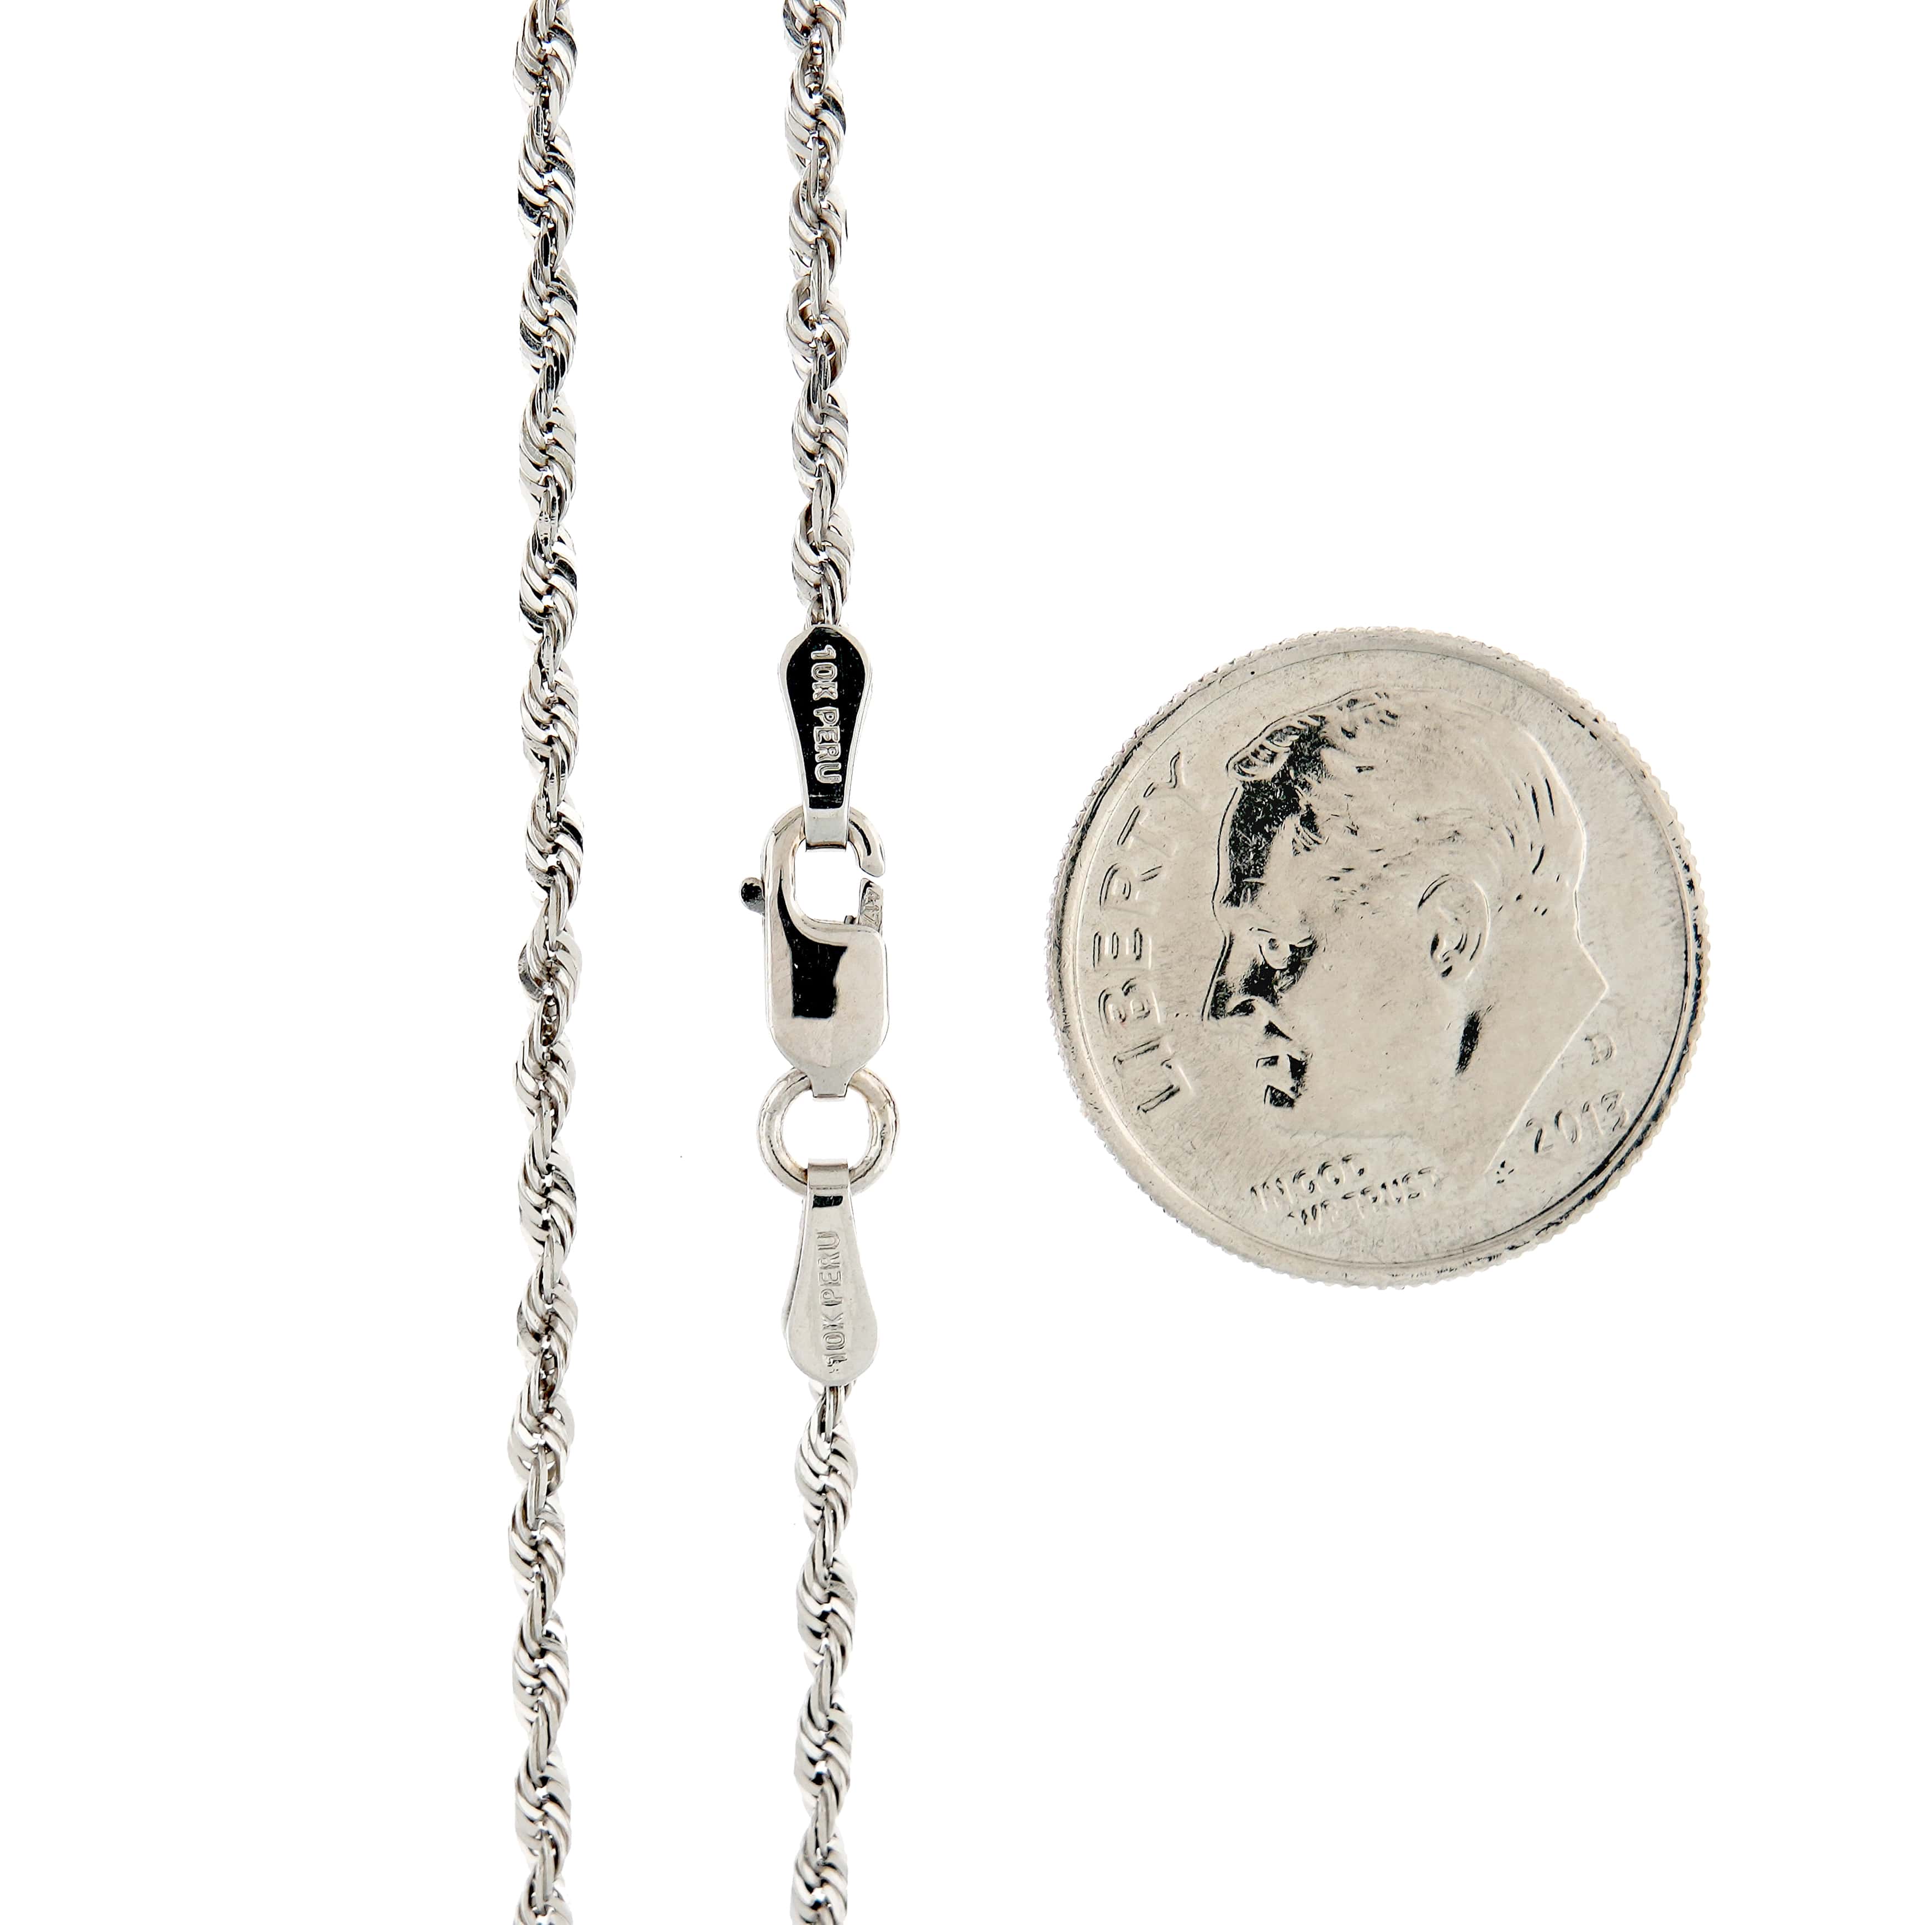 10k White Gold 1.85mm Diamond Cut Quadruple Rope Bracelet Anklet Choker Necklace Pendant Chain